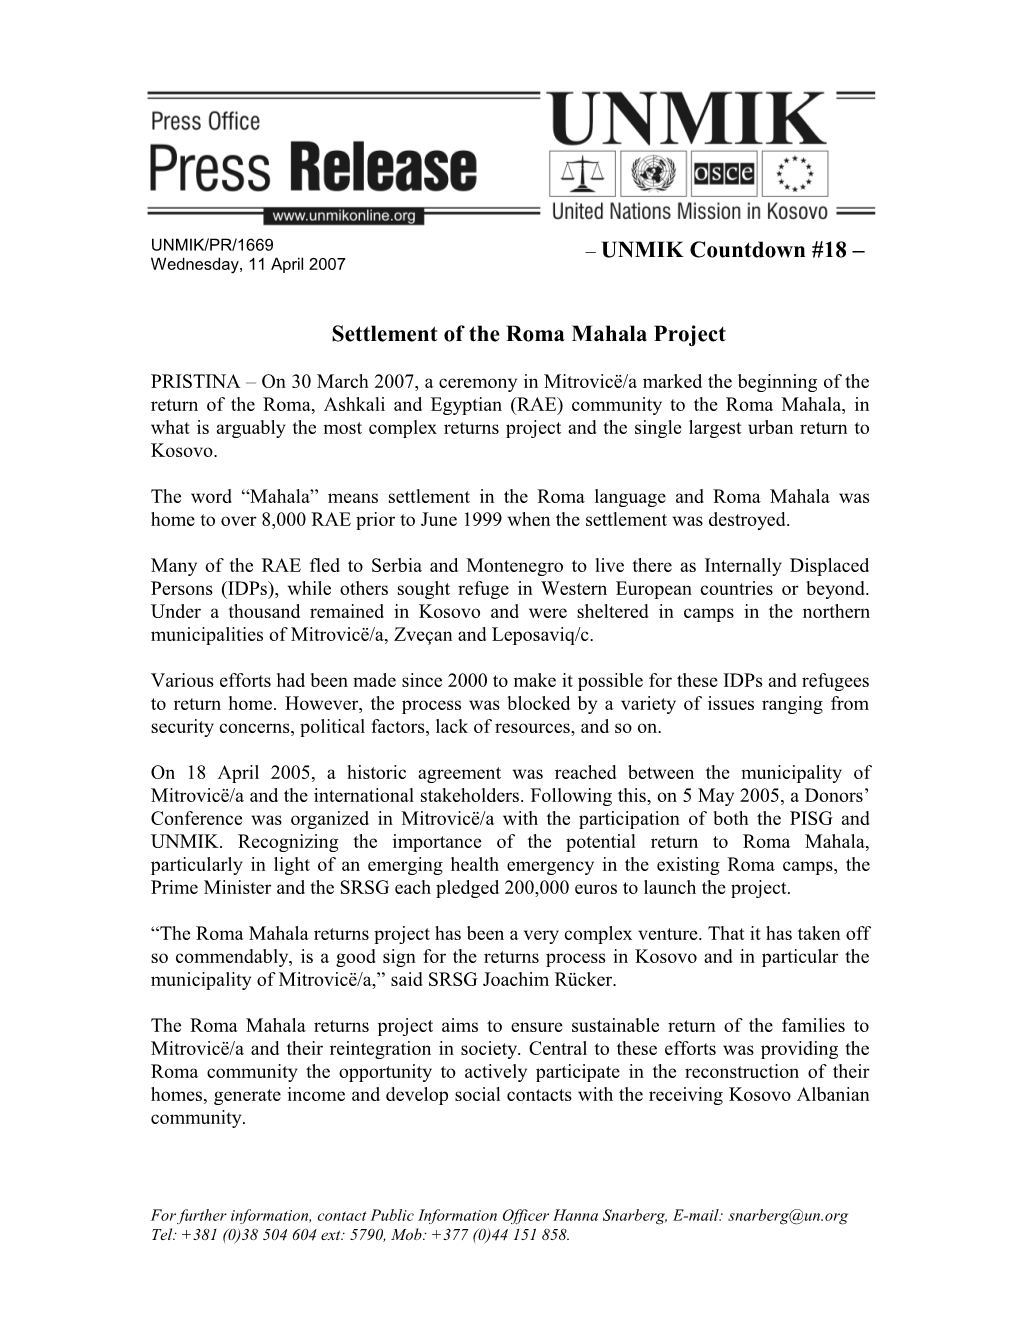 11/04/2007 - UNMIK Countdown-18 - Settlement of the Roma Mahala Project